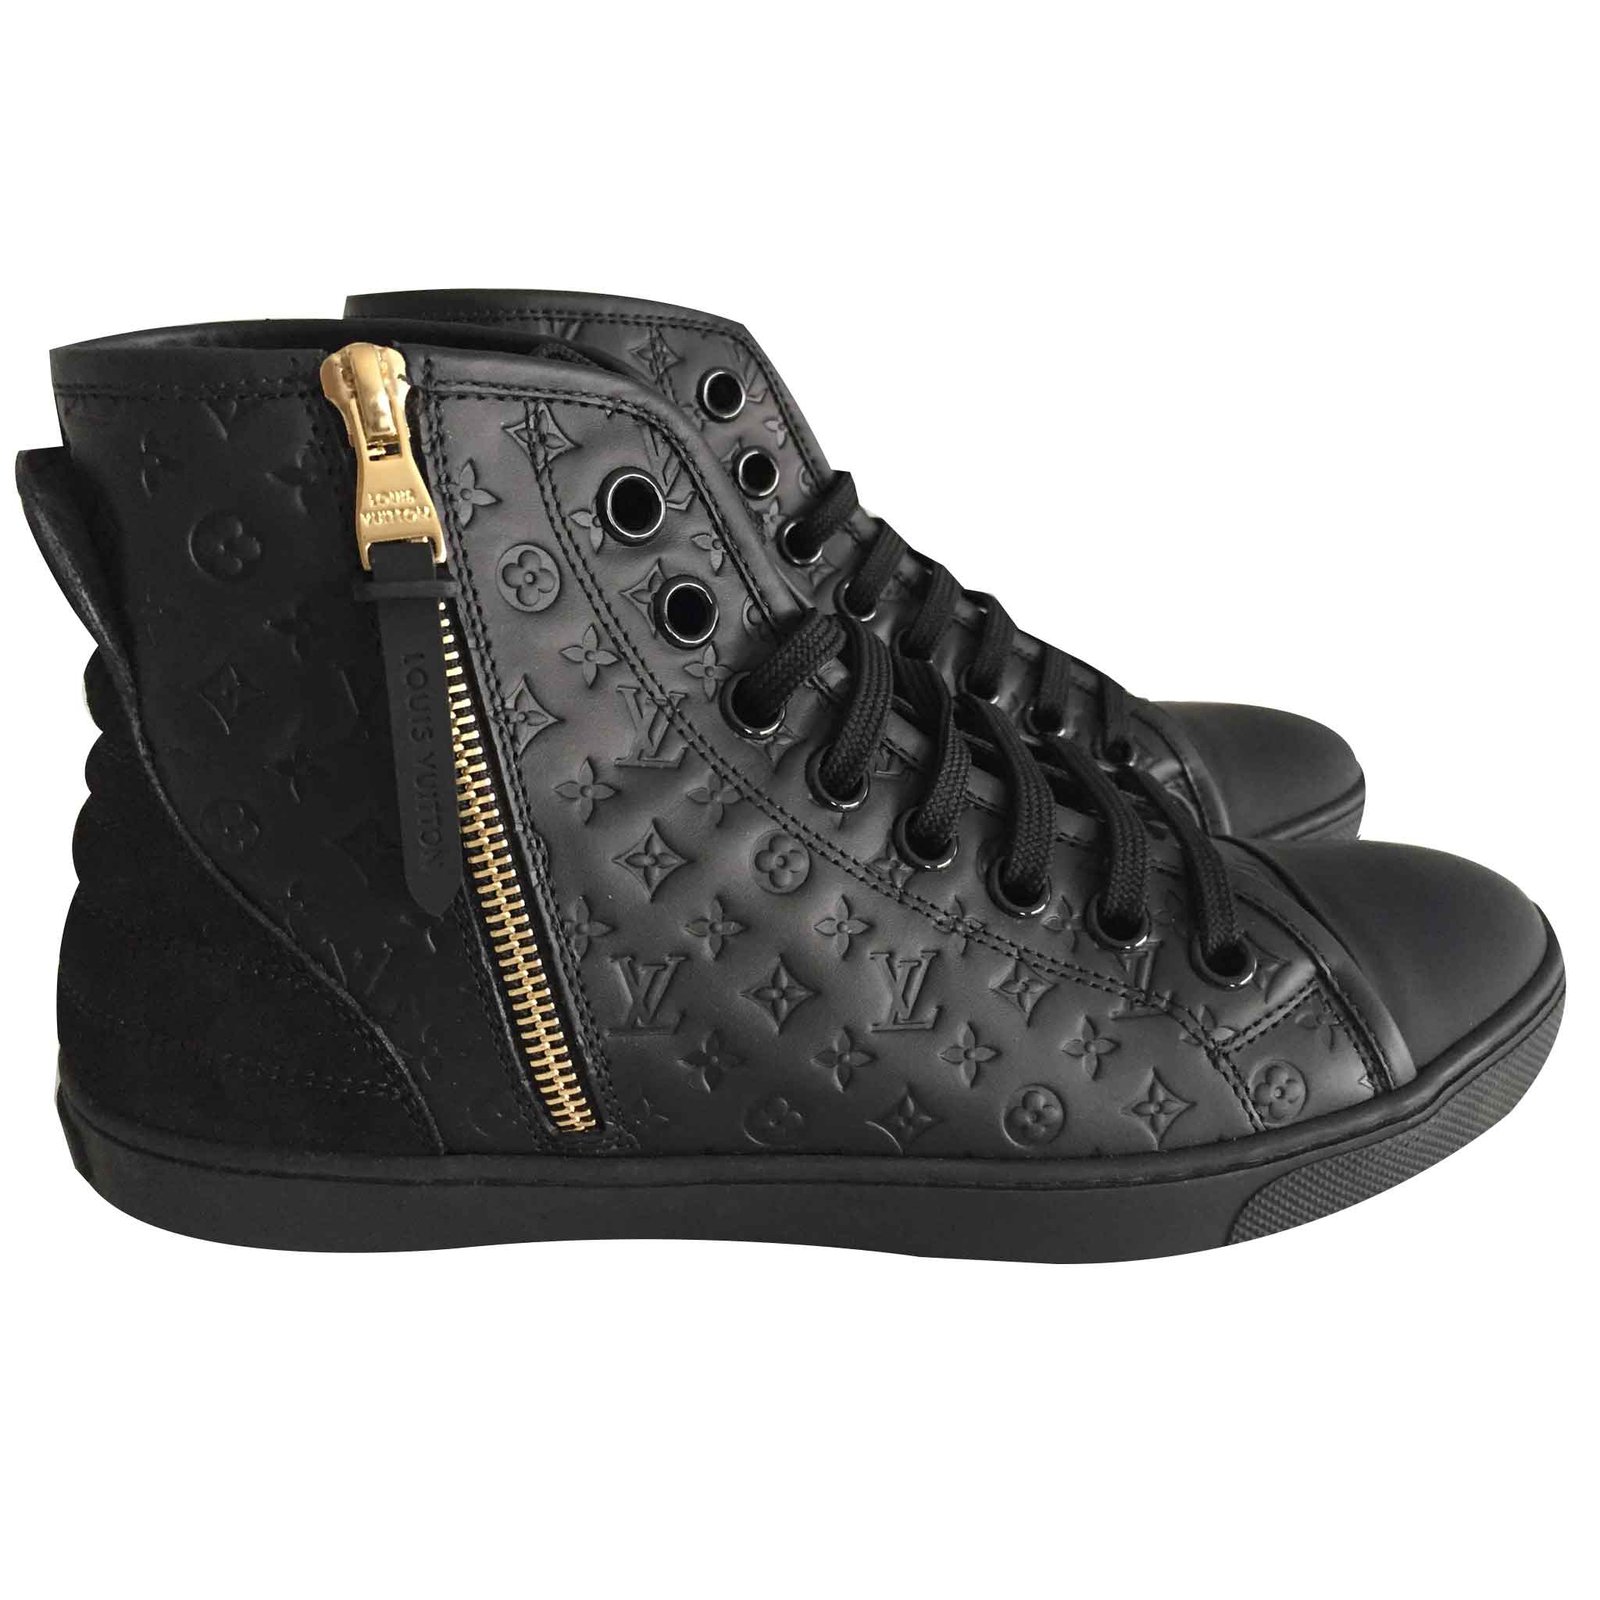 Louis Vuitton high boot black sneakers